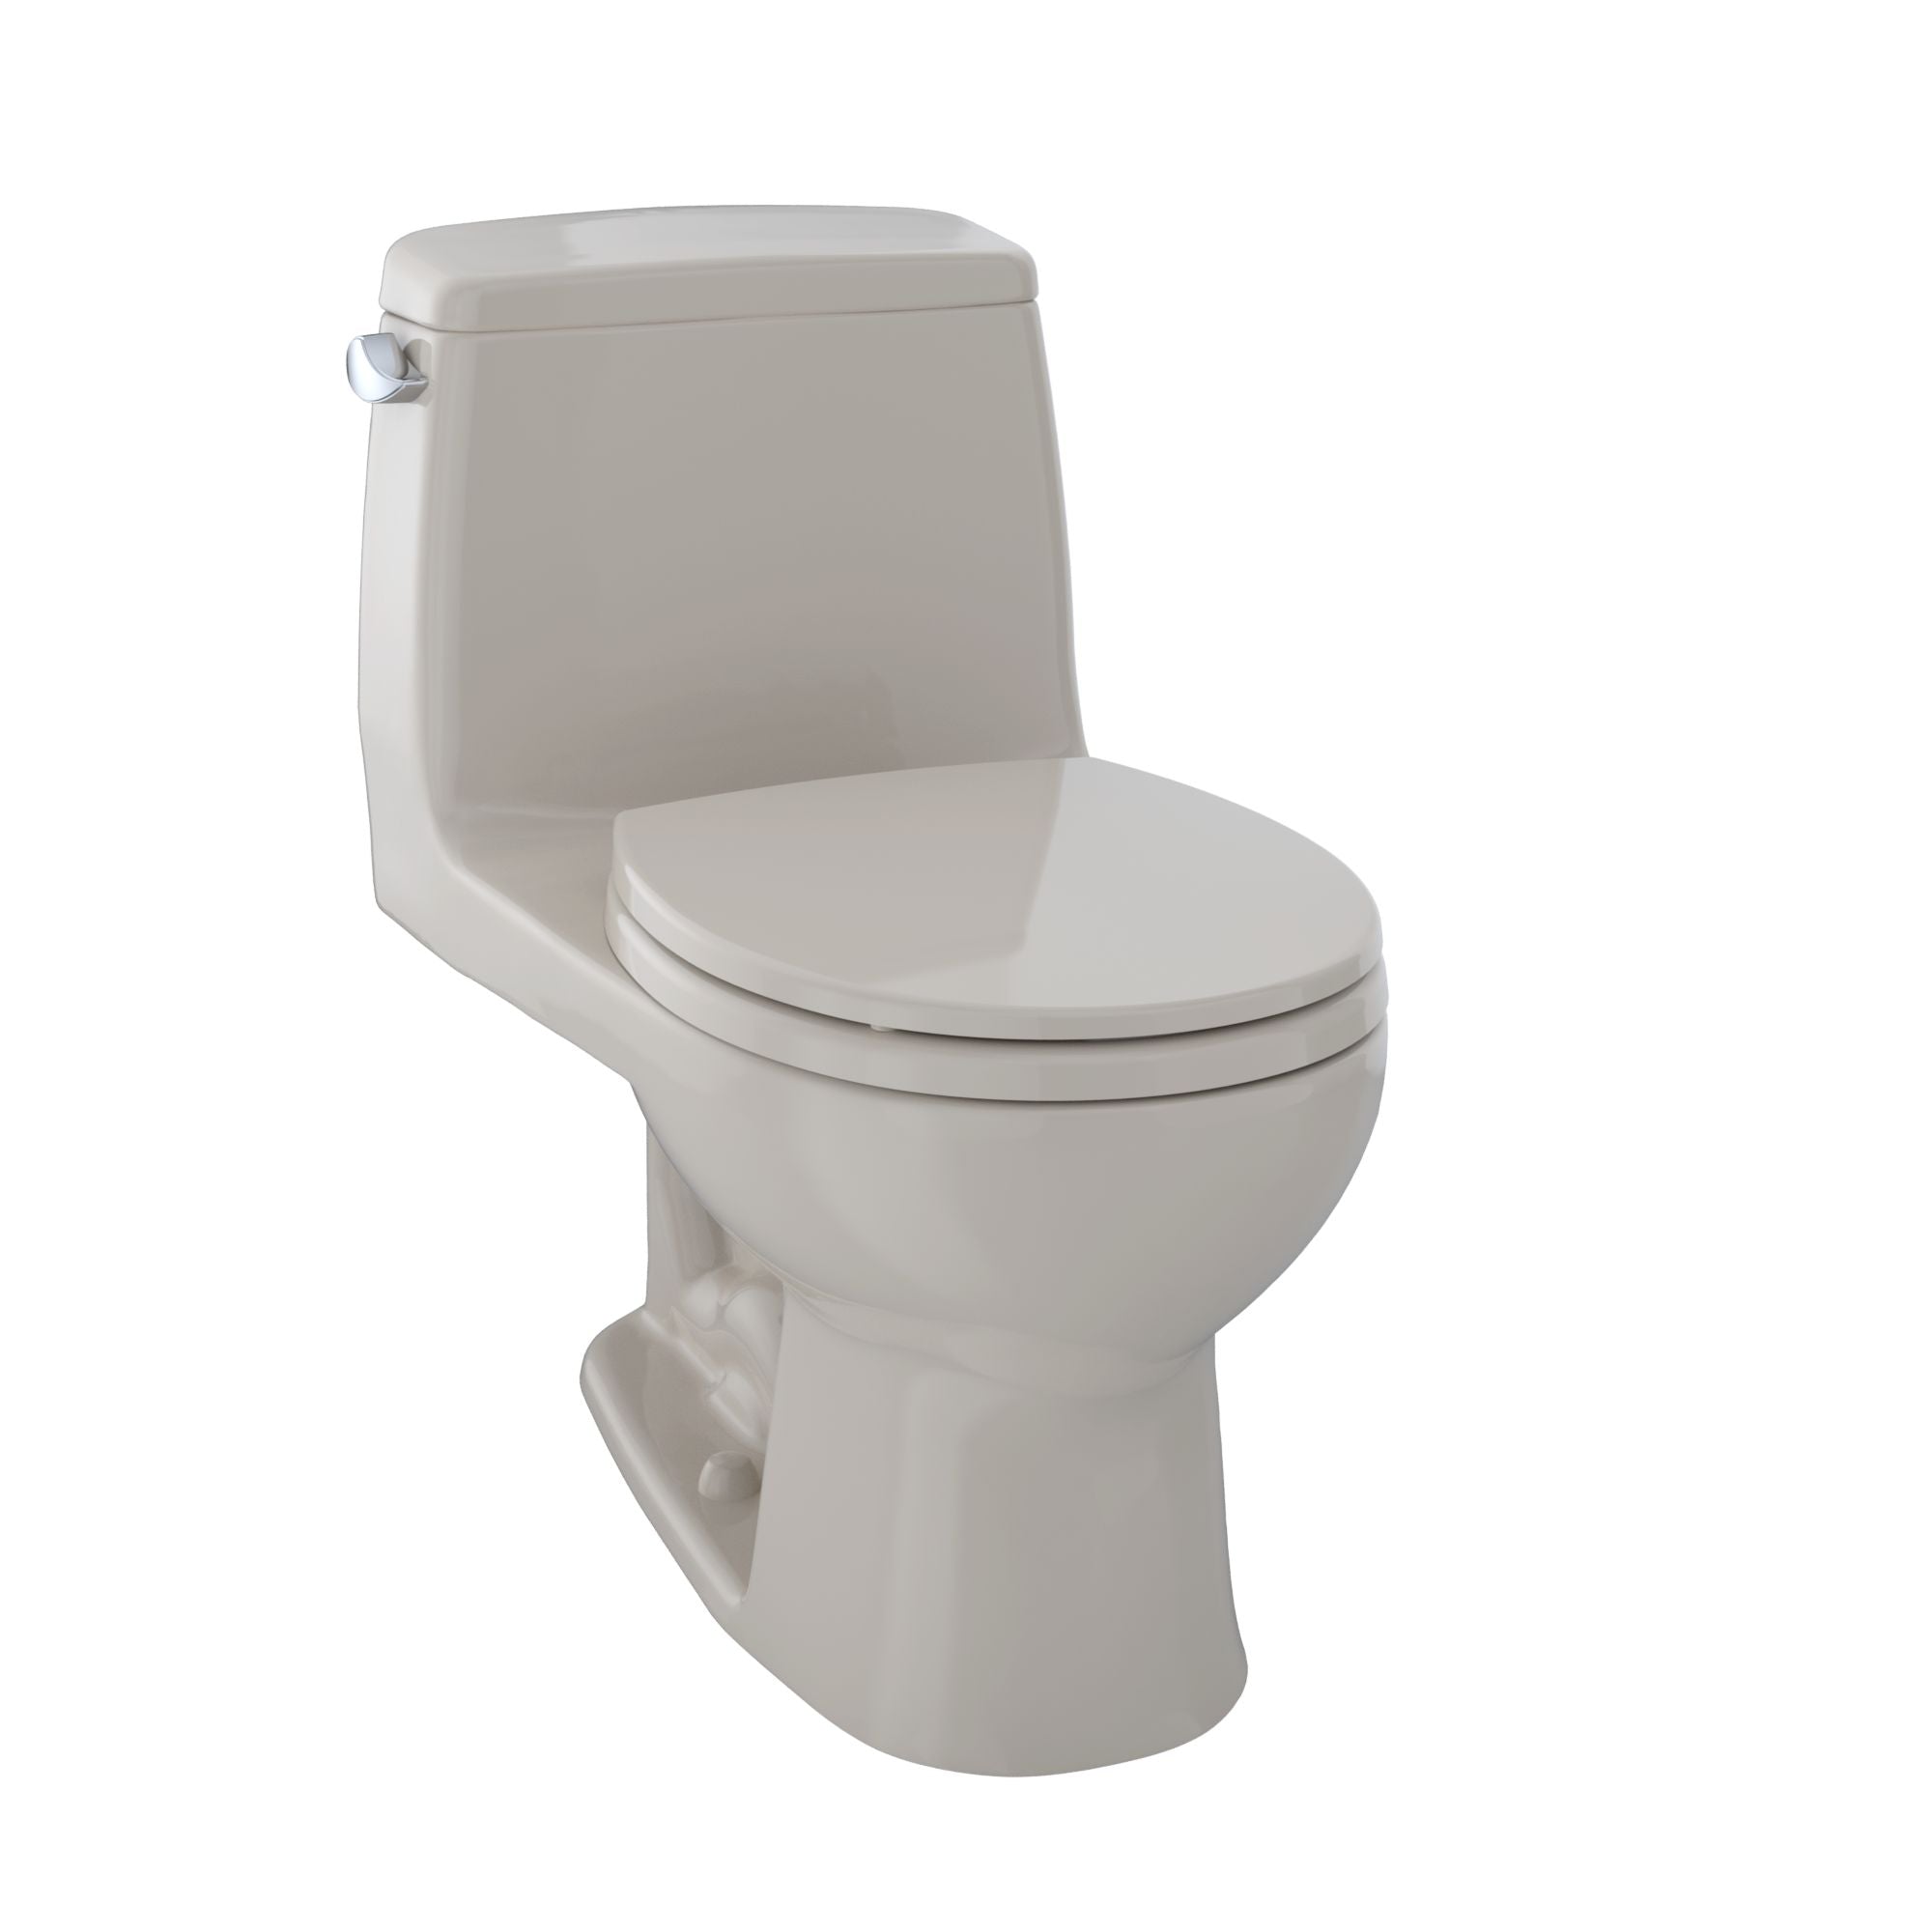 Toto Eco Ultramax One-piece Toilet 1.28 GPF Round Bowl